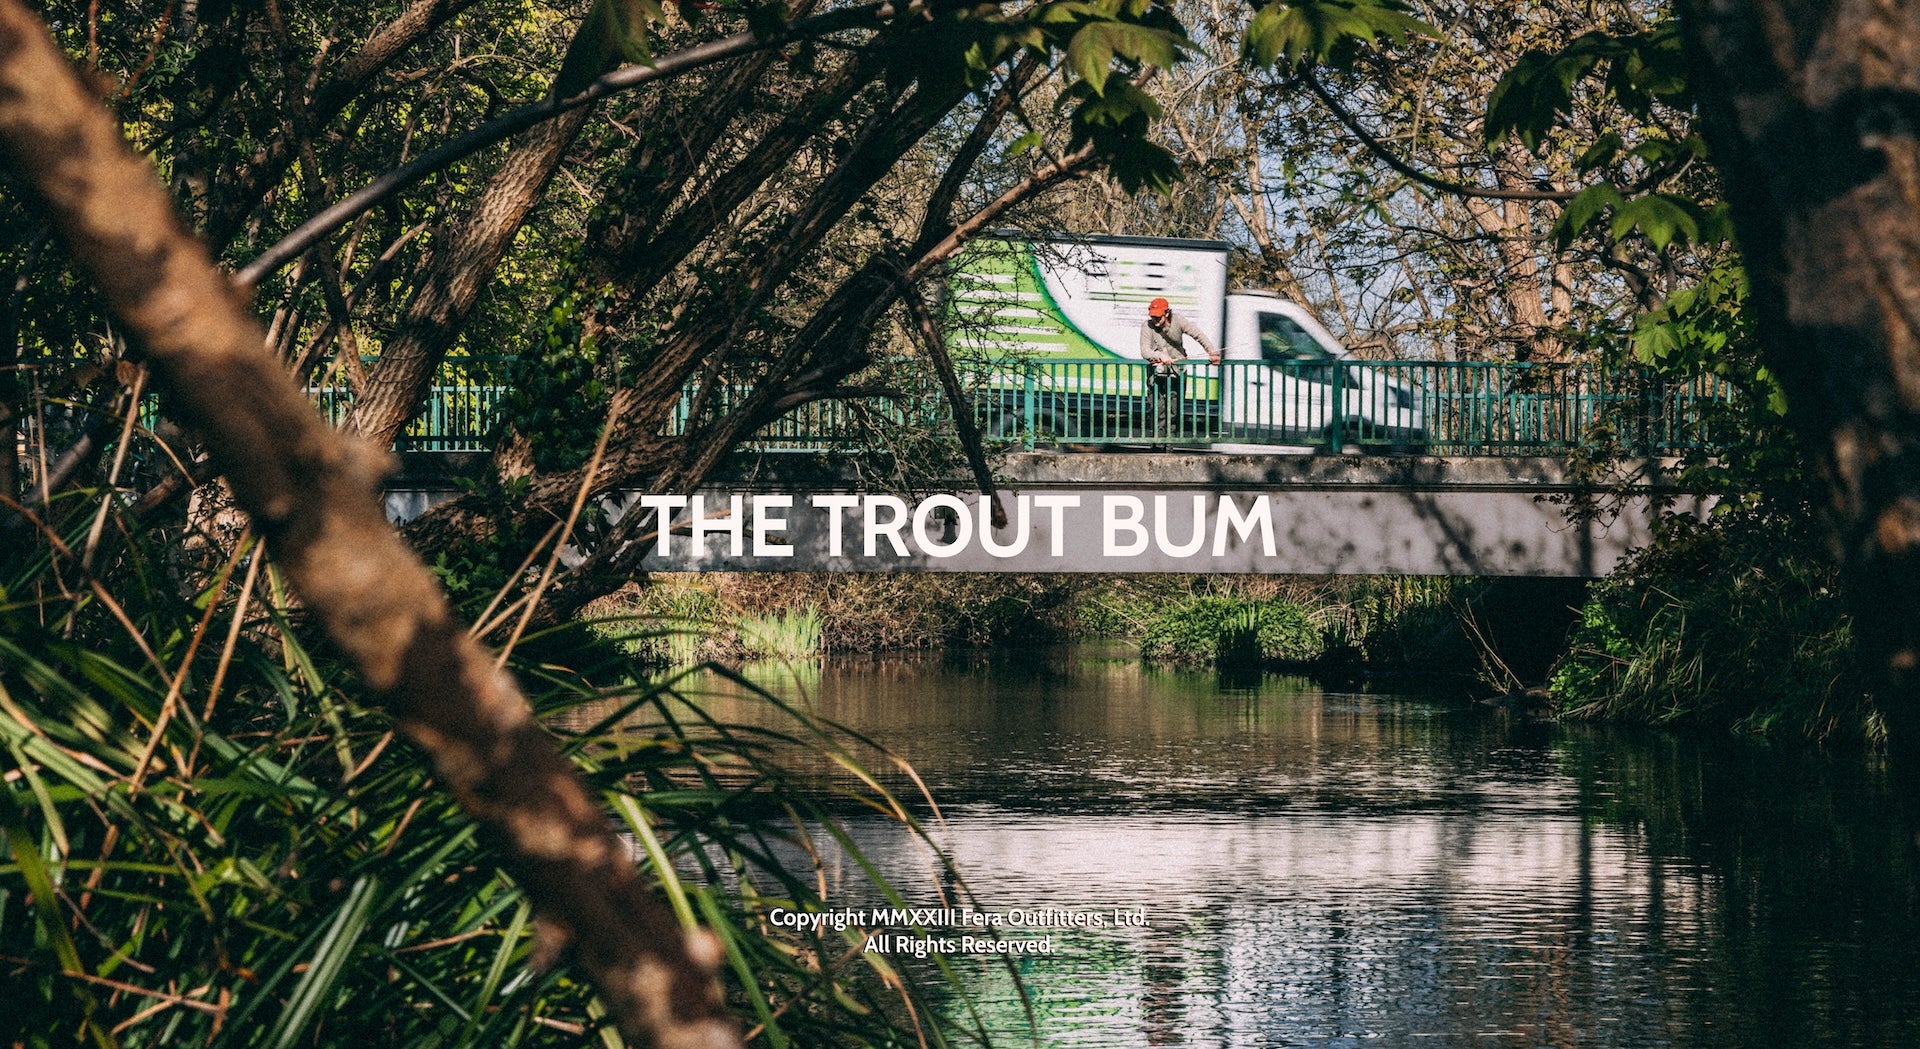 The Trout Bum